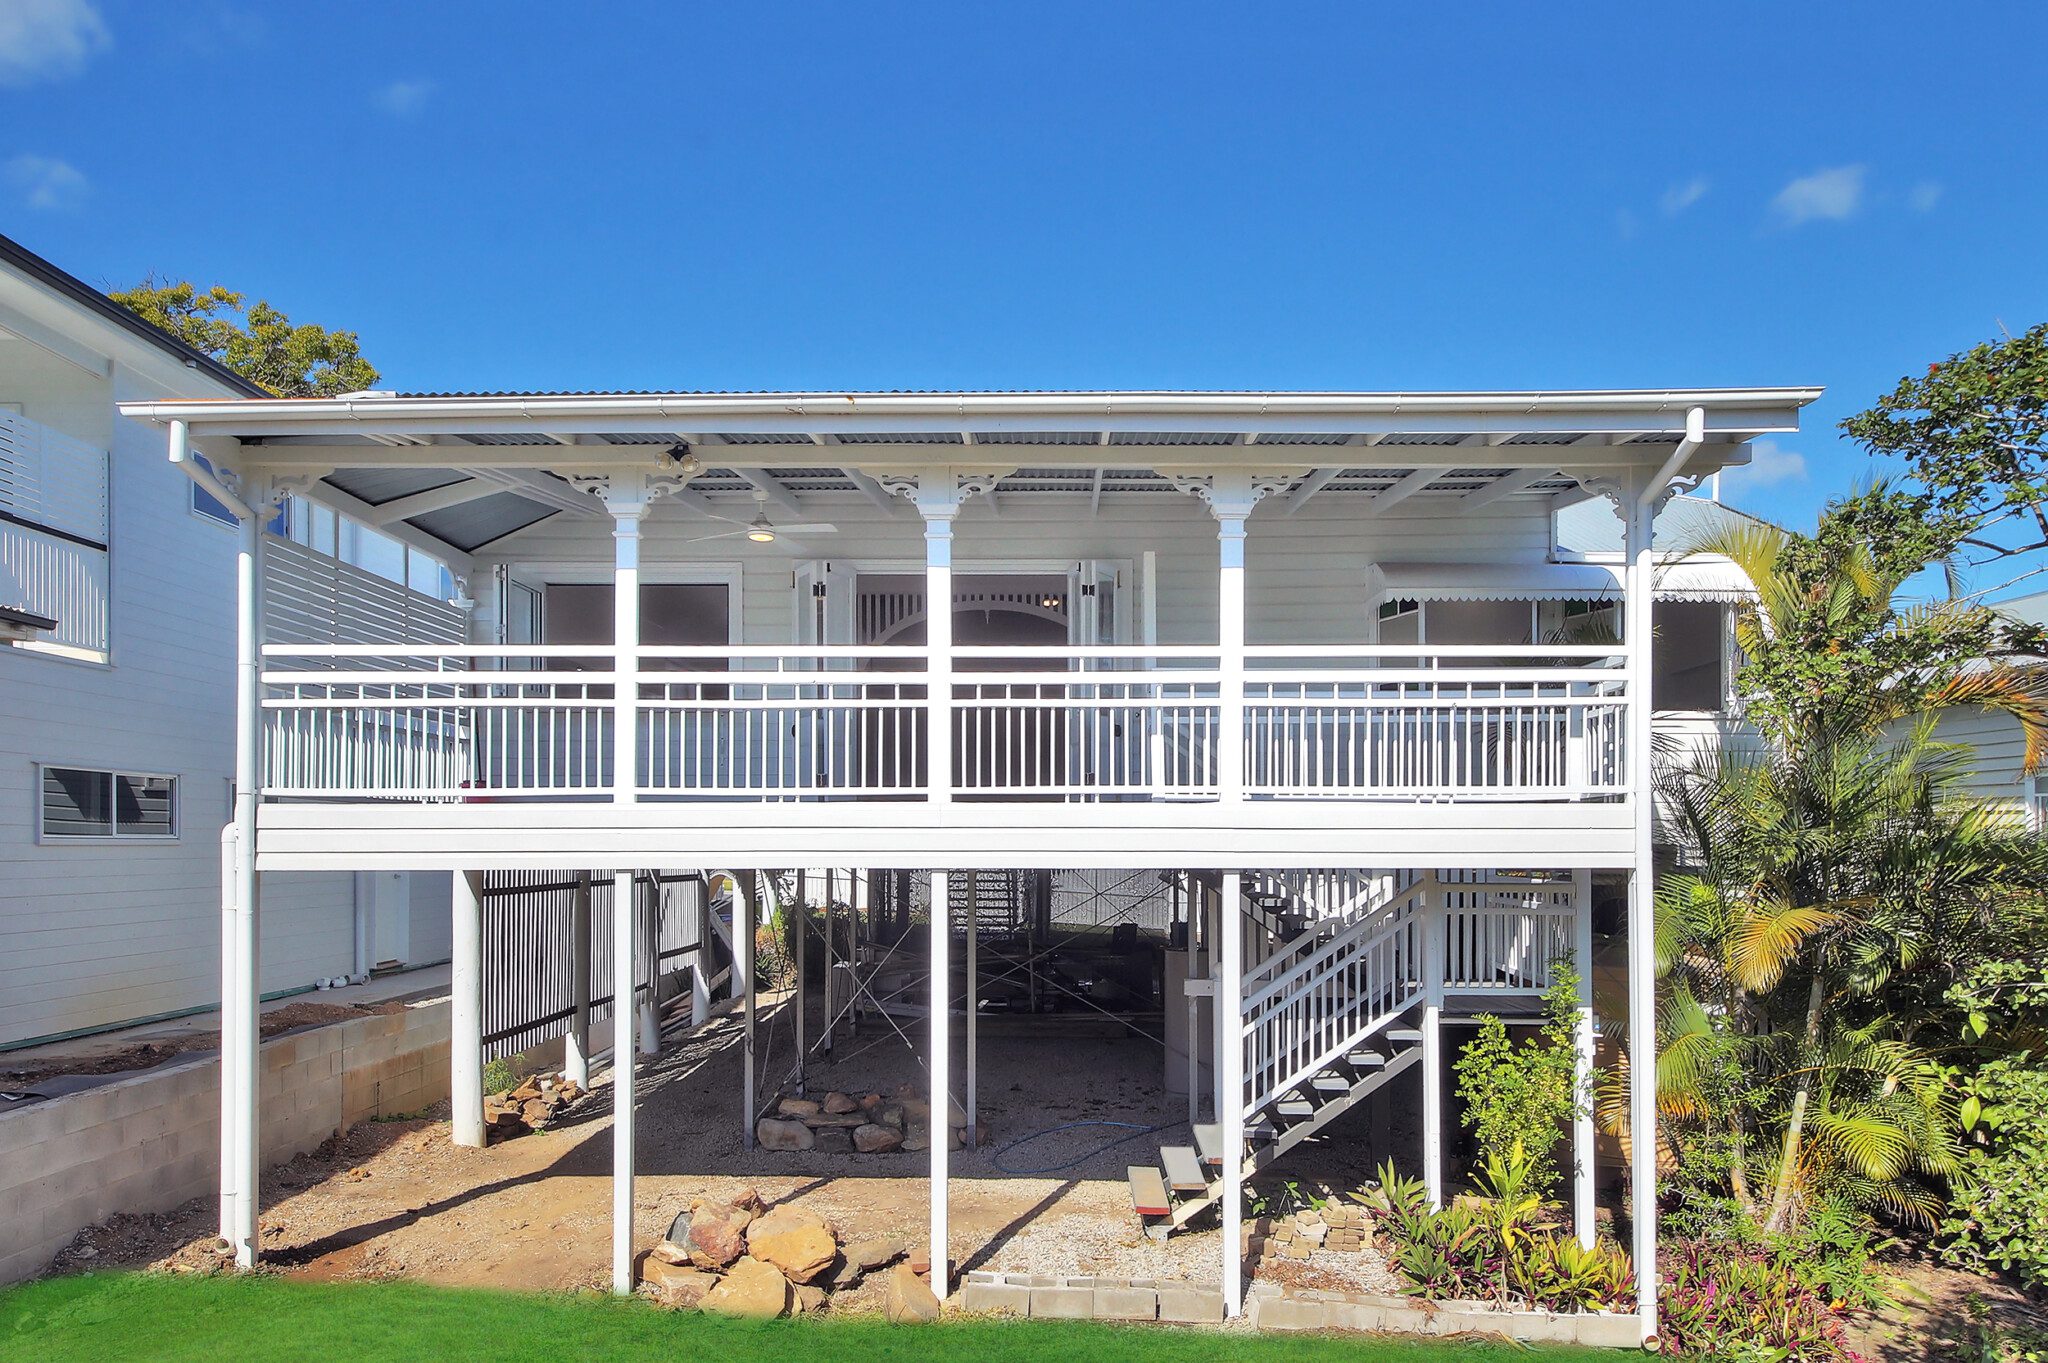 Quintessential Coastal, Country, Beach Queenslander House located in Brisbane